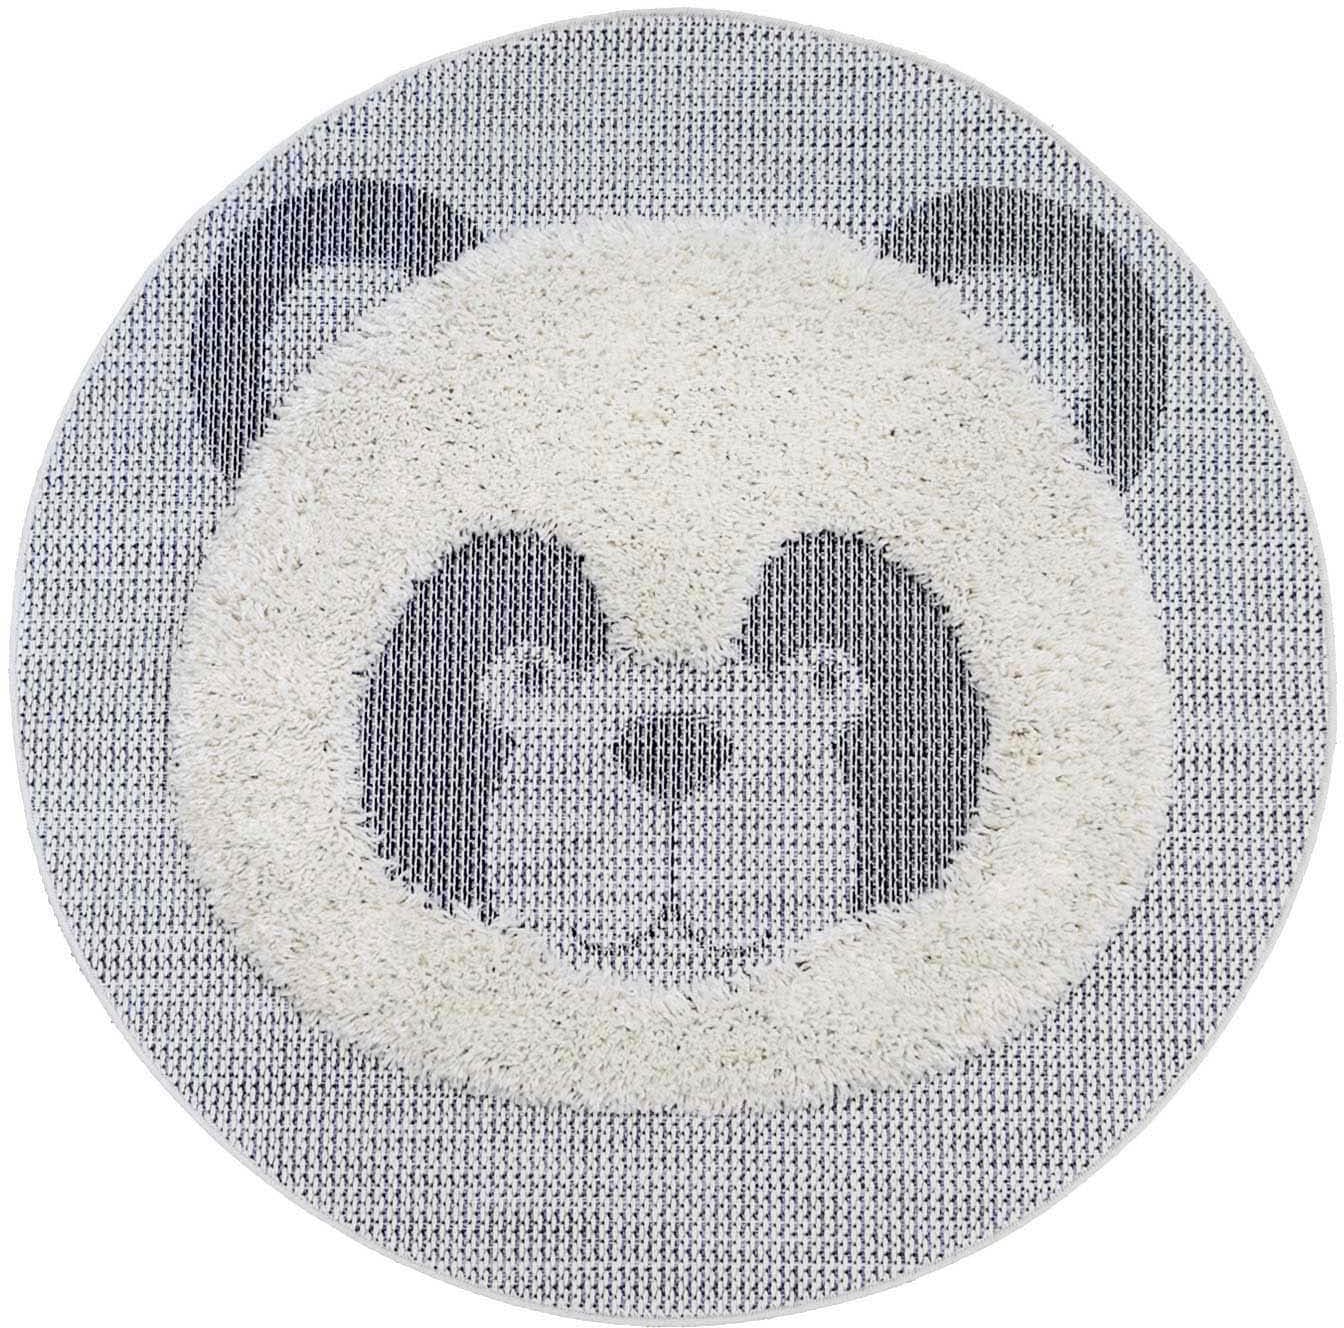 Kinderteppich »NAVAJO - Panda«, rund, Hoch-Tief-Effekt, Motiv Panda, Kinderzimmer